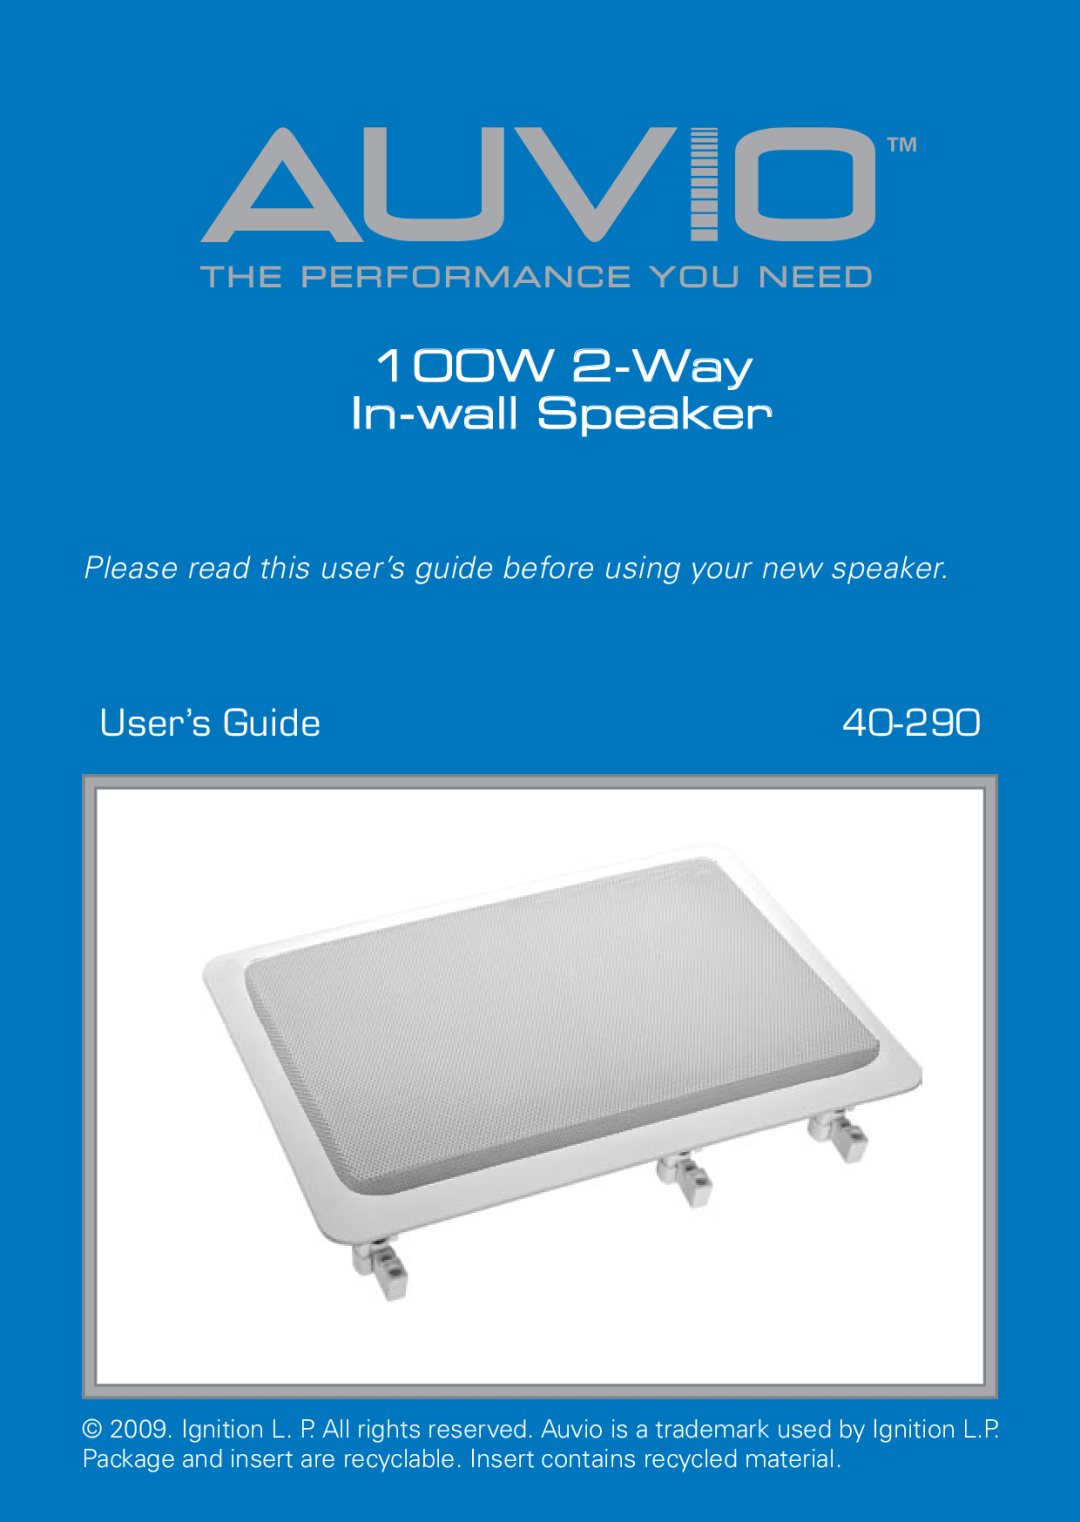 Radio Shack 40-290 manual 100W 2-WayIn -wallSpeaker, User’s Guide, Theperformance You Need 